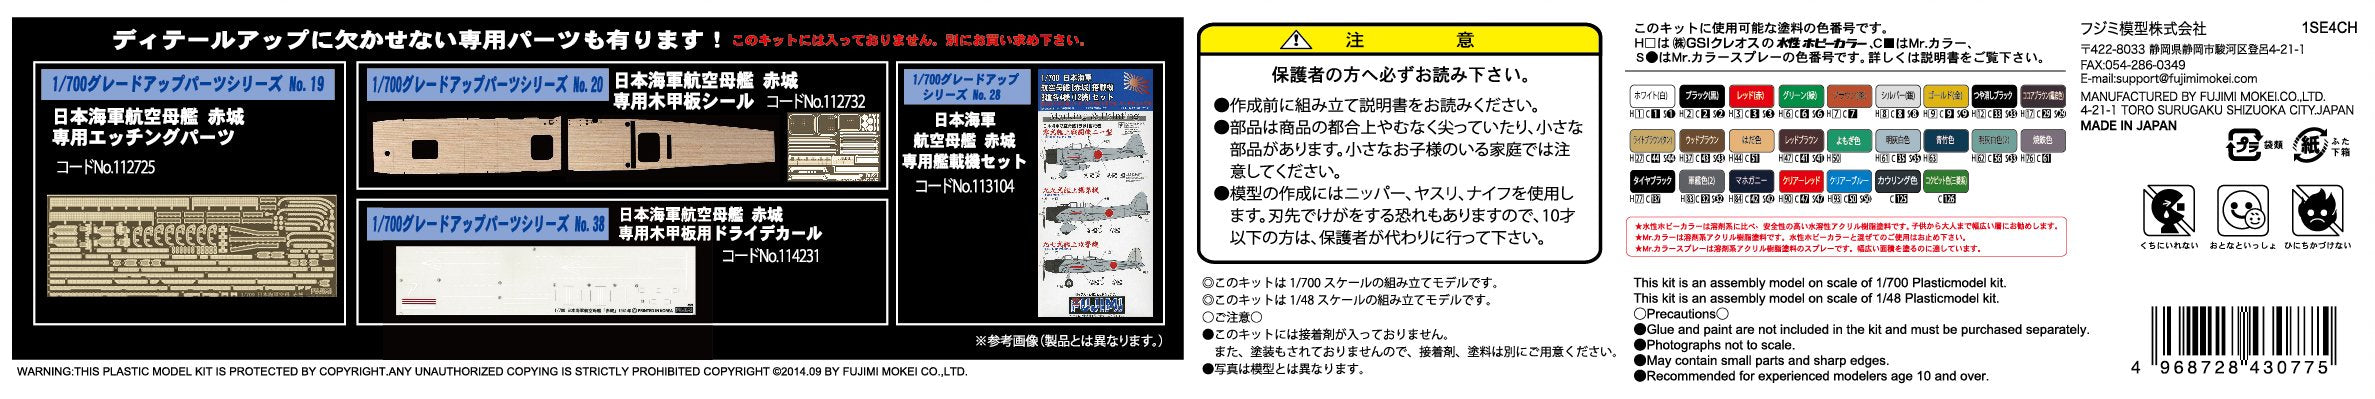 Fujimi Aircraft Carrier Akagi 1/700 & Mitsubishi A6m2b Zero 1/48 Pearl Harbor Set Plastic Model